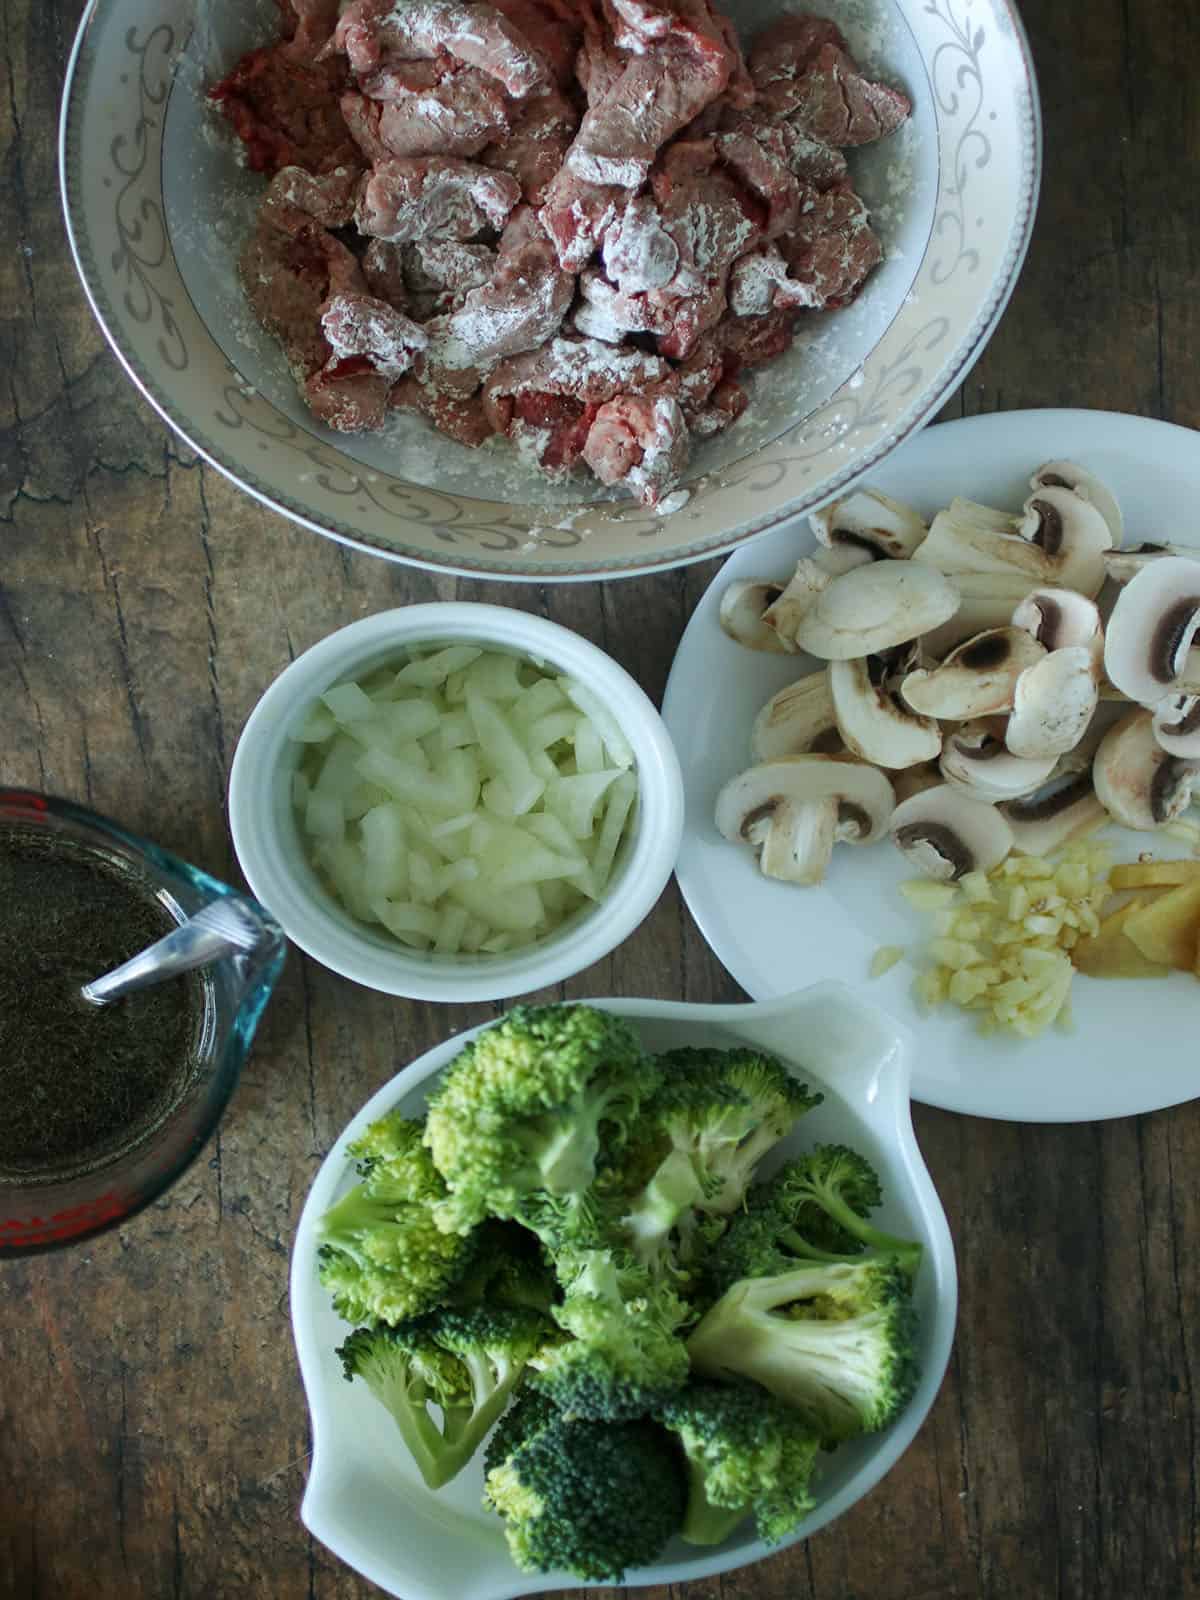 The ingredients for the beef teriyaki.